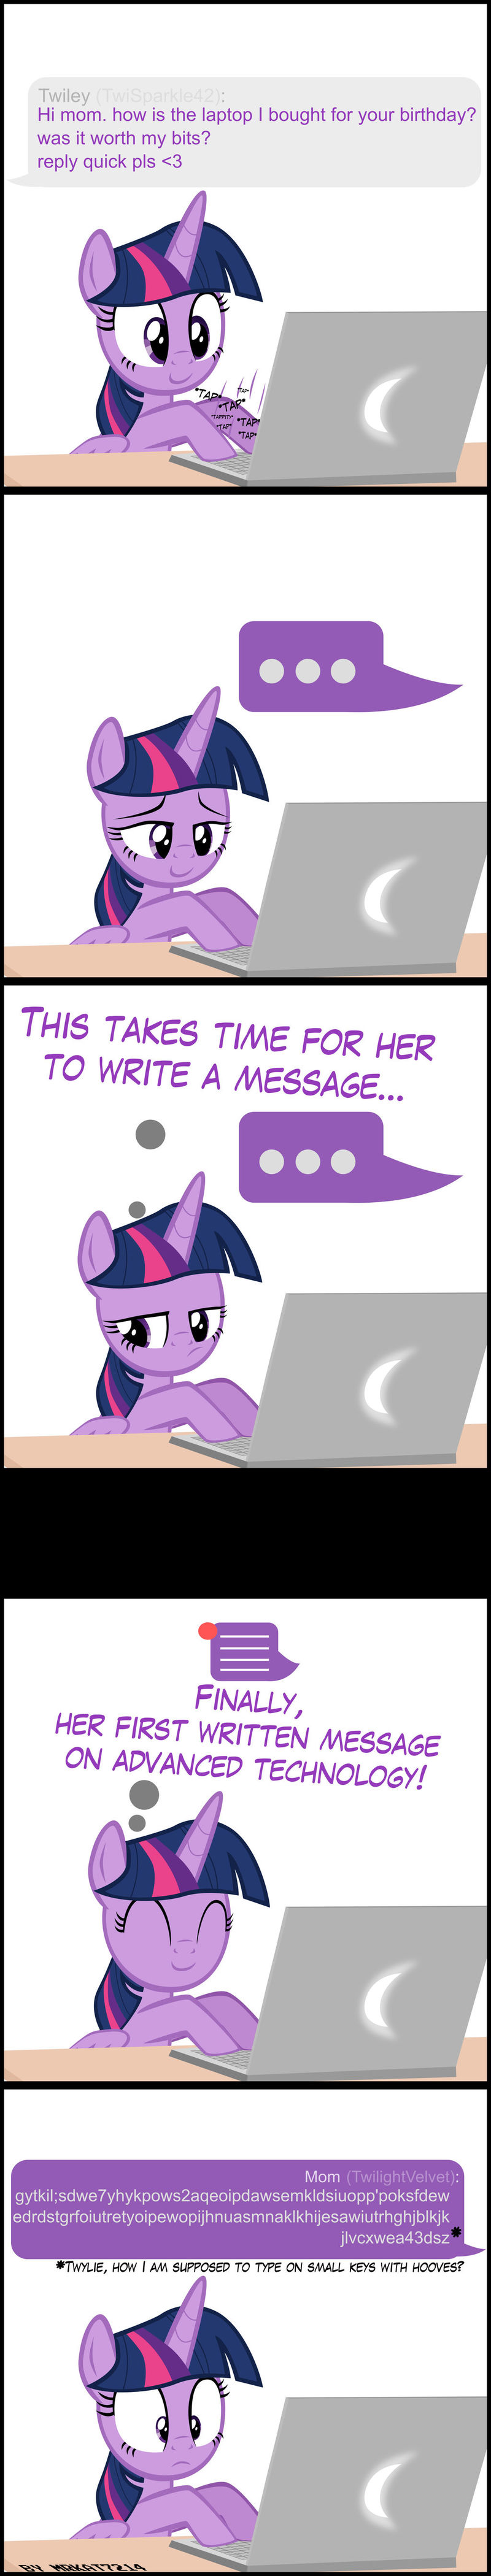 Comic 8 - Twilight's Message to Mom